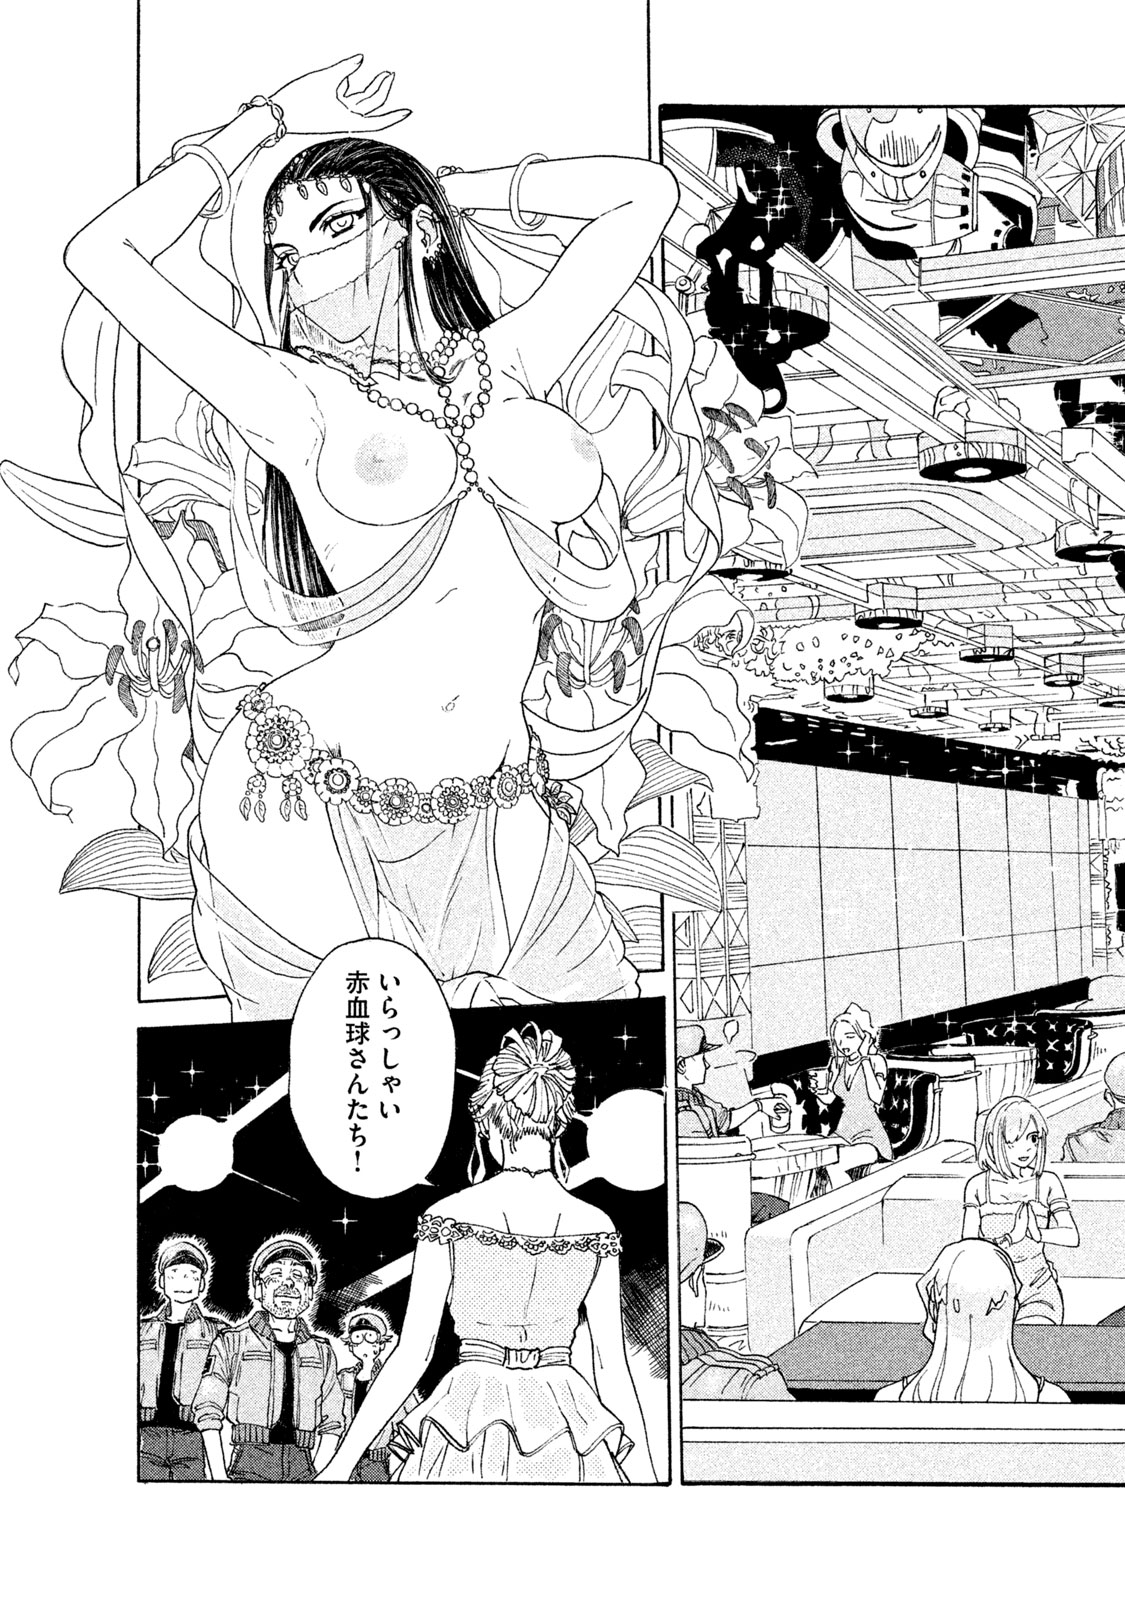 Hataraku Saibou BLACK - Chapter 2 - Page 9